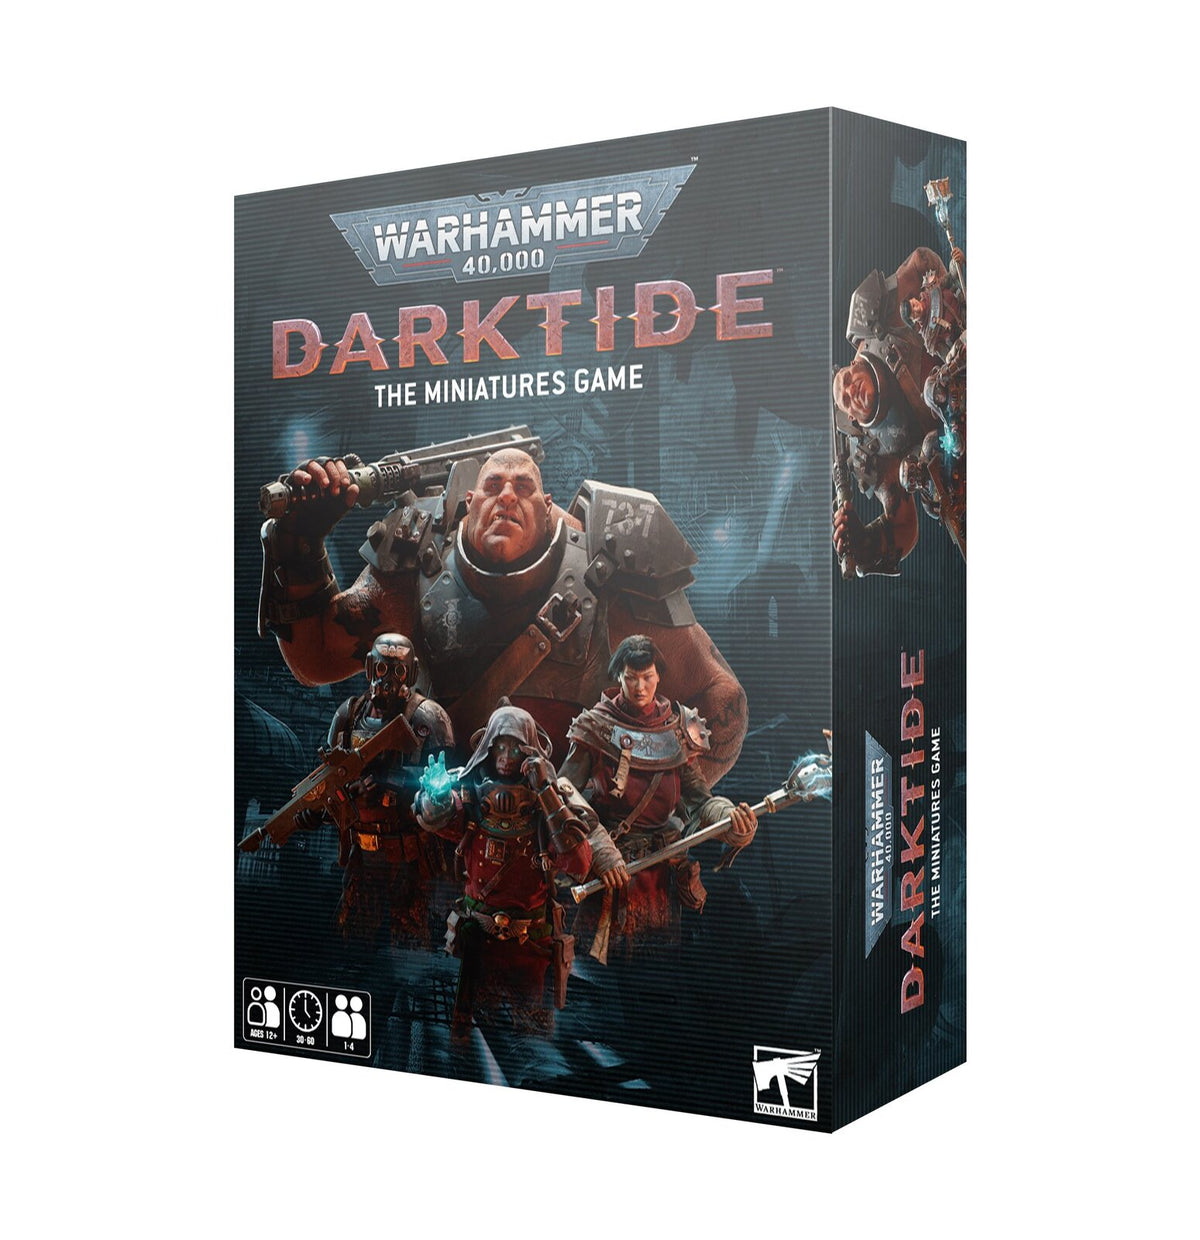 Darktide: The Miniatures Game (English) (103-30) (Preorder)